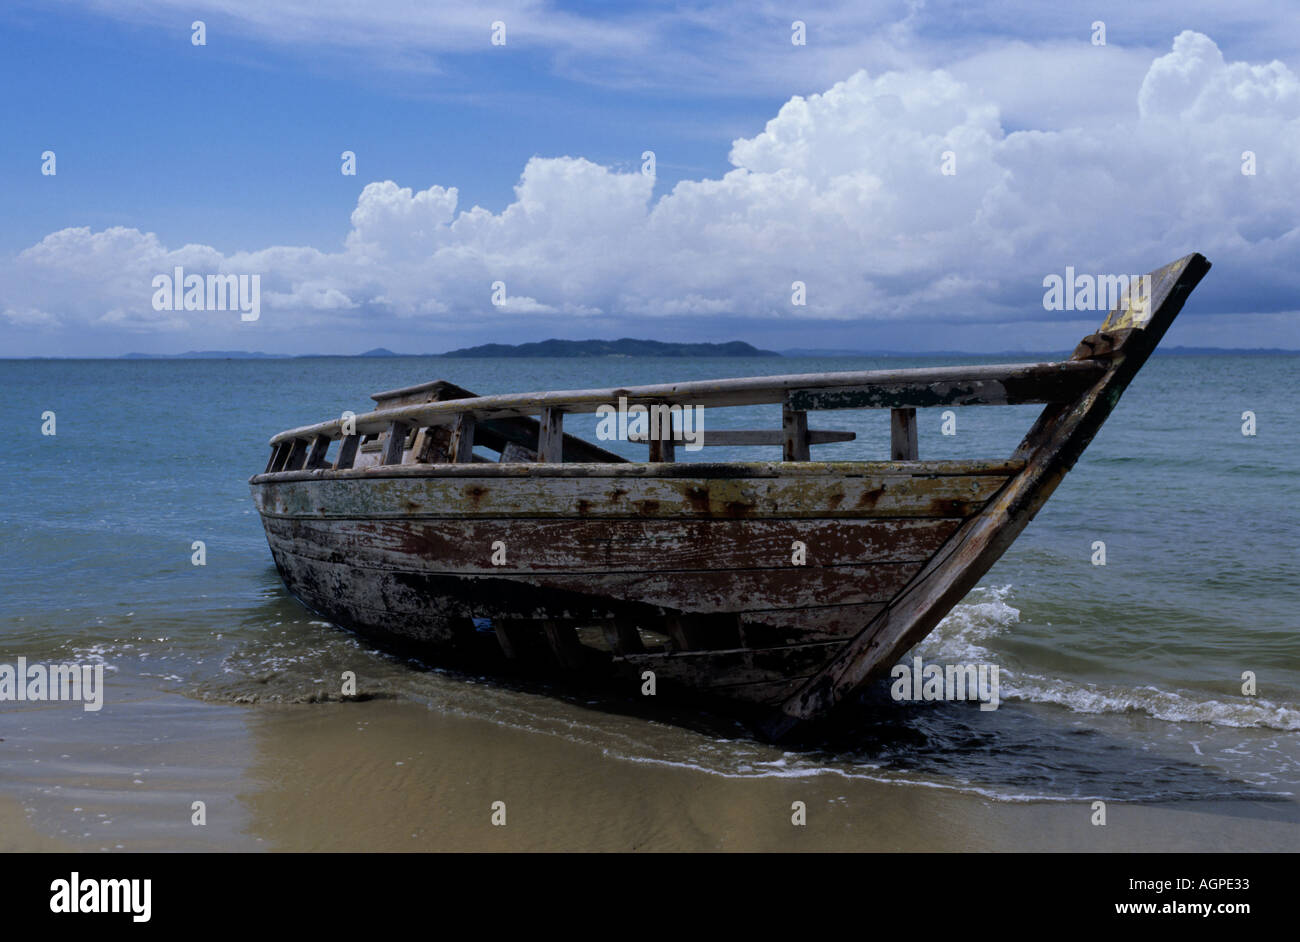 shipwreck on the beach of the Ilha de Itaparica island Stock Photo